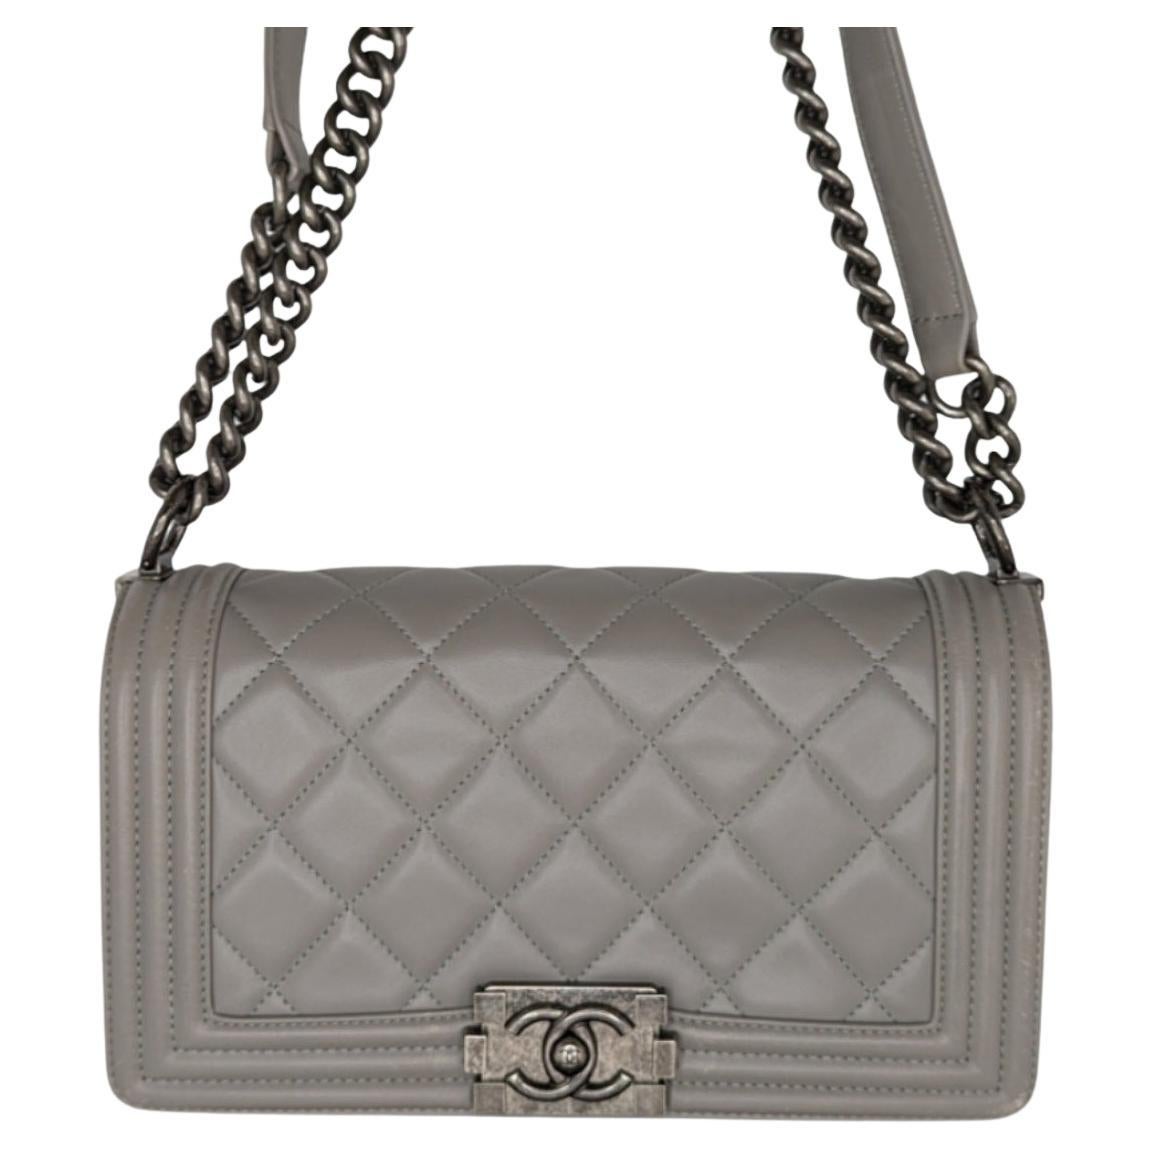 Gray Chanel Bag - 269 For Sale on 1stDibs  grey chanel bag, chanel gray bag,  chanel grey bag